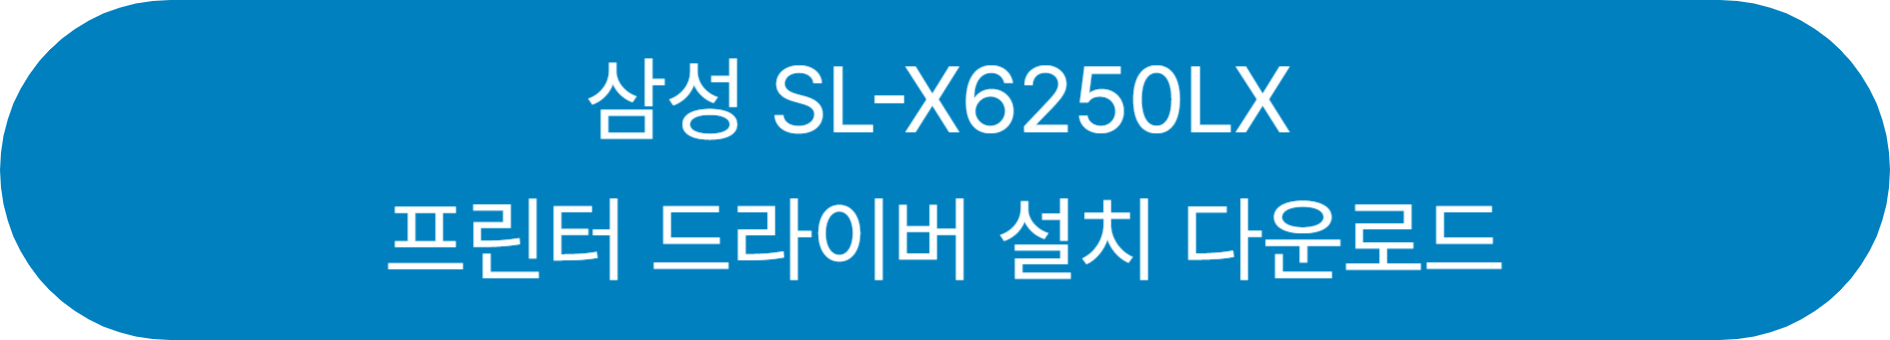 SL-X6250LX 바로가기